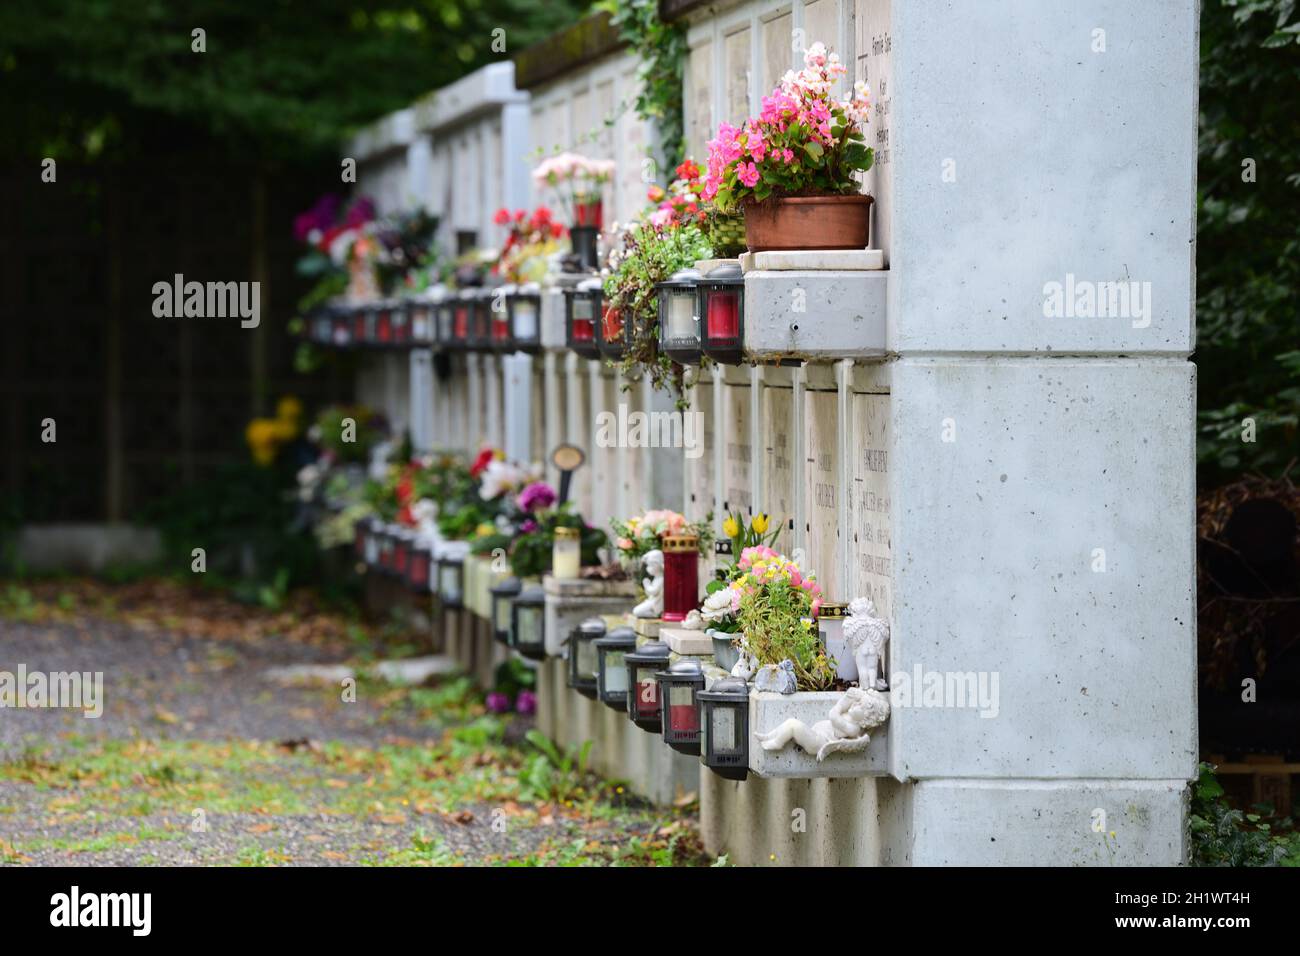 Urnen-Friedhof in St. Martin, Linz, Oberösterreich, Österreich, Europa - Urn cemetery in St. Martin, Linz, Upper Austria, Austria, Europe Stock Photo